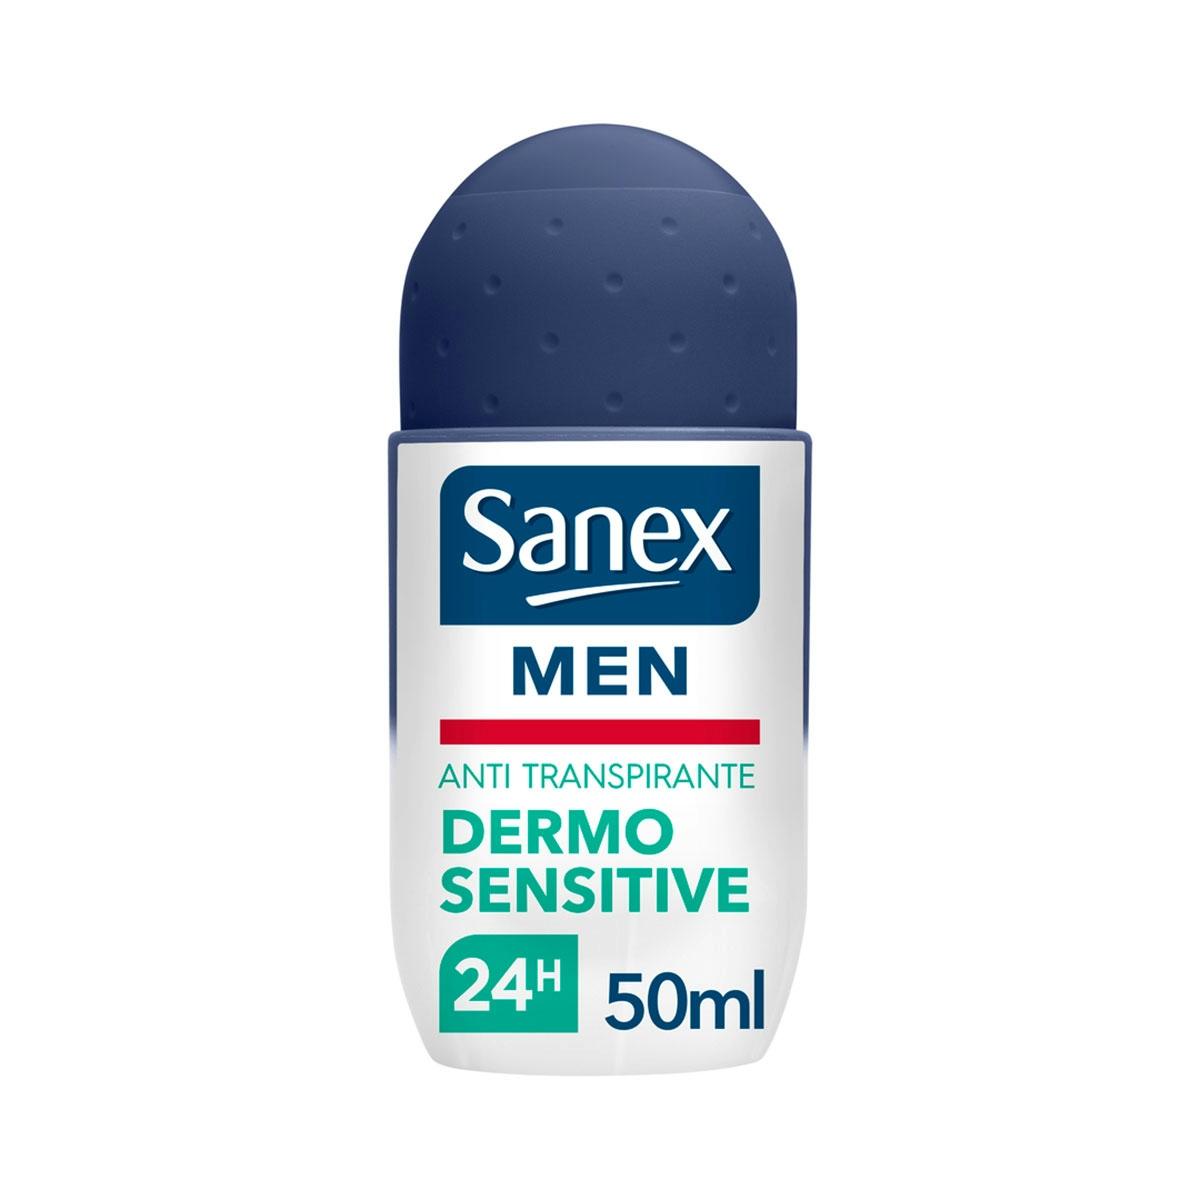 Desodorante roll-on para hombre Sanex Men Dermo Sensitive 24h antitranspirante 50ml